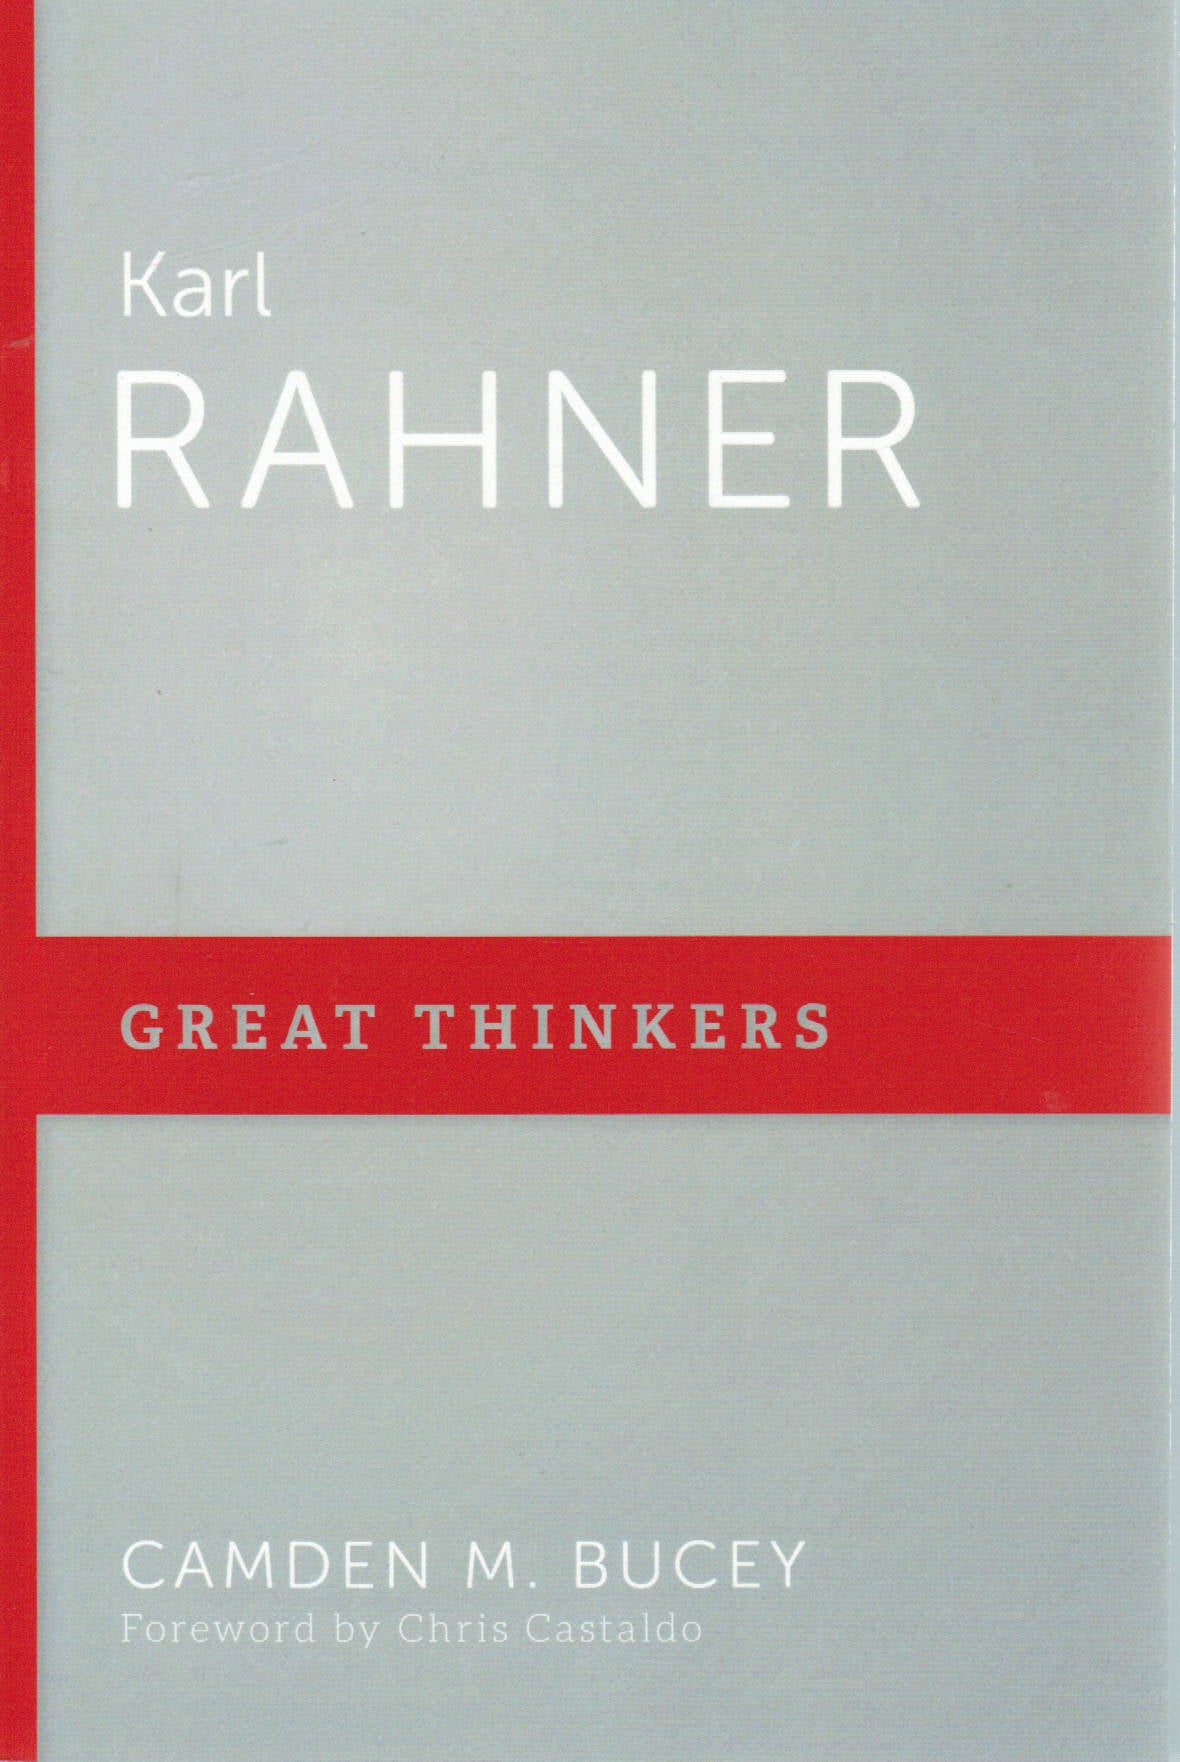 Great Thinkers - Karl Rahner